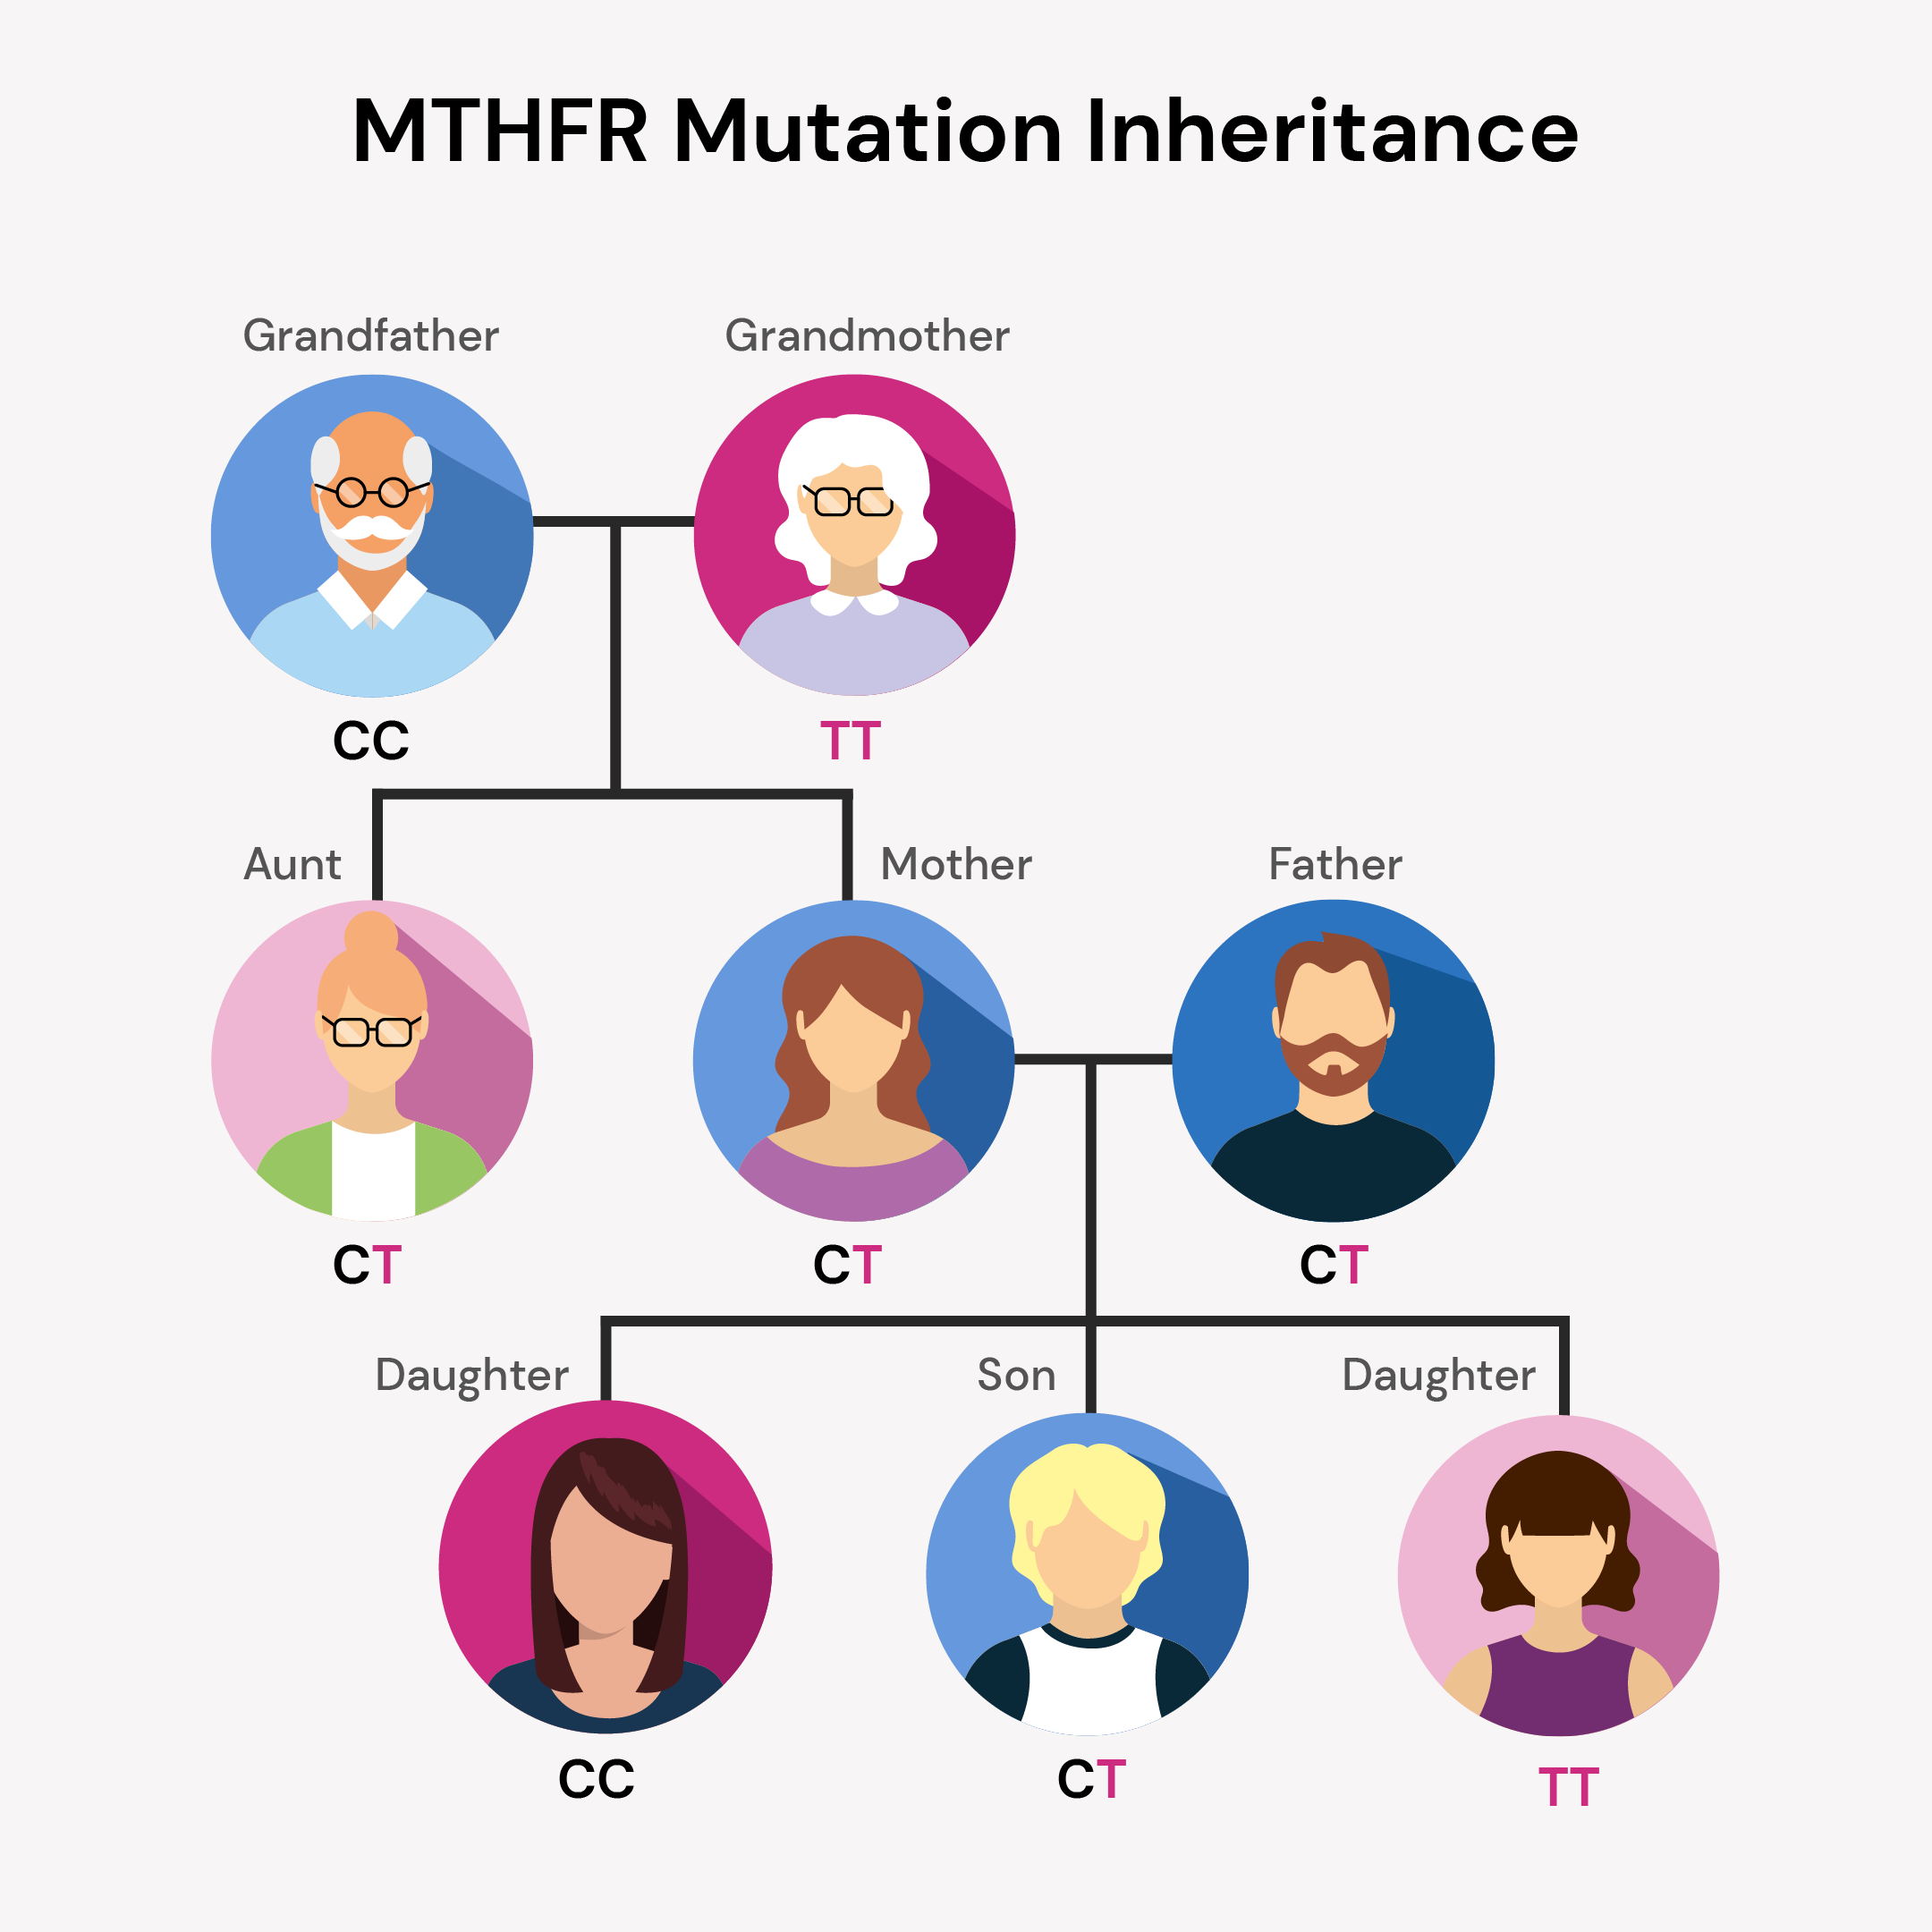 mthfr mutation